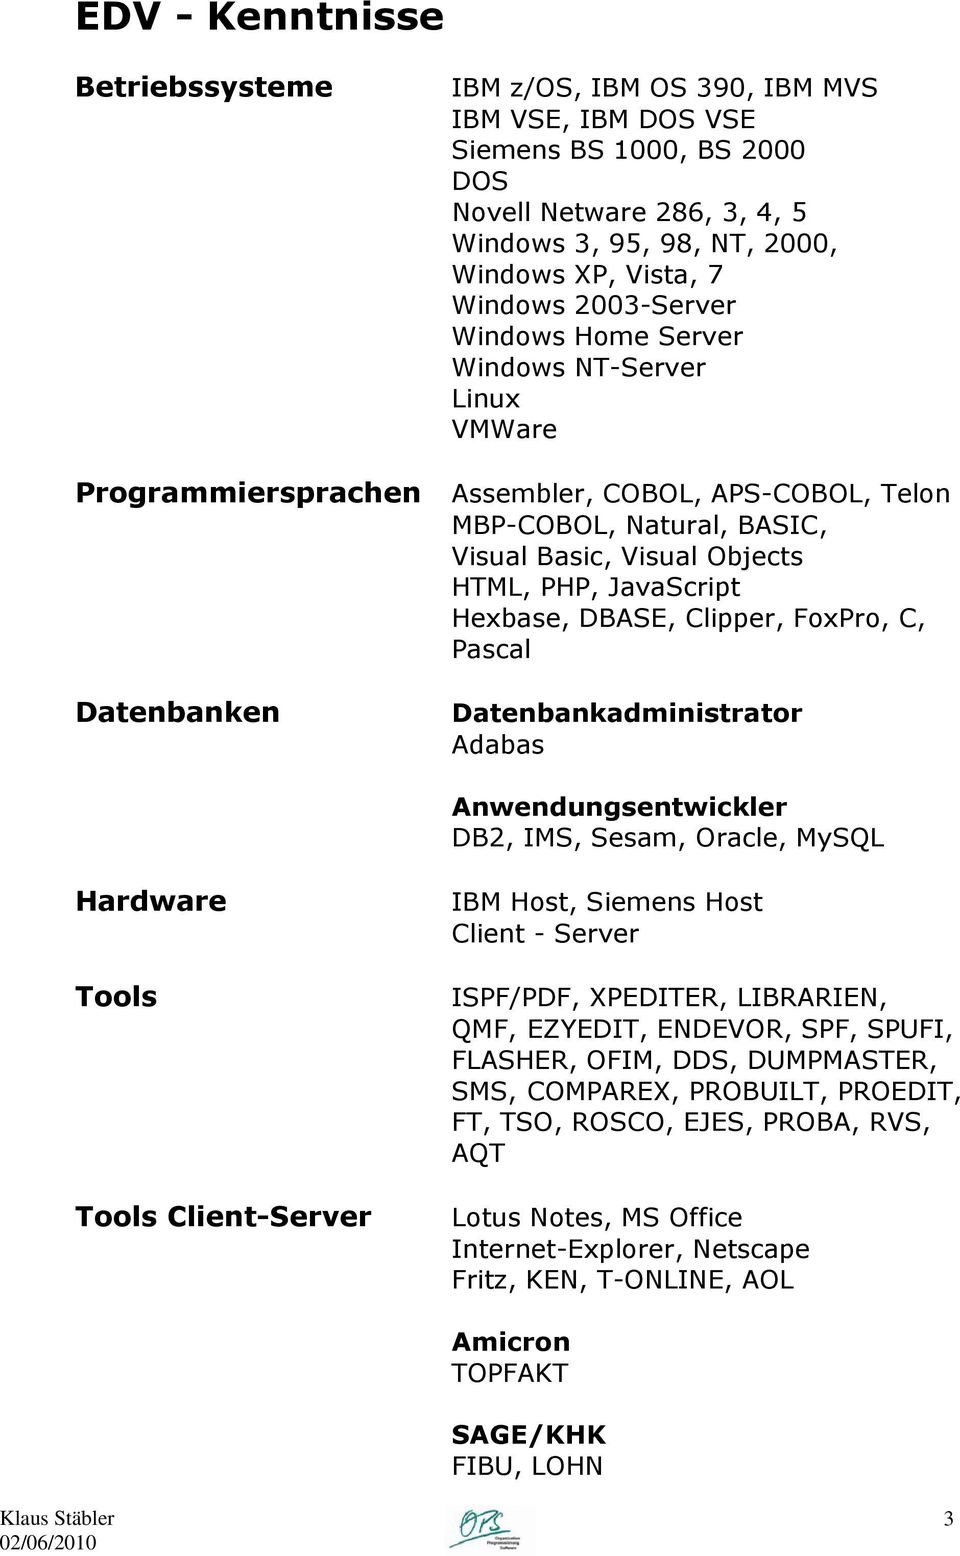 Clipper, FoxPro, C, Pascal Datenbanken Datenbankadministrator Adabas Anwendungsentwickler DB2, IMS, Sesam, Oracle, MySQL Hardware Tools Tools Client-Server IBM Host, Siemens Host Client - Server